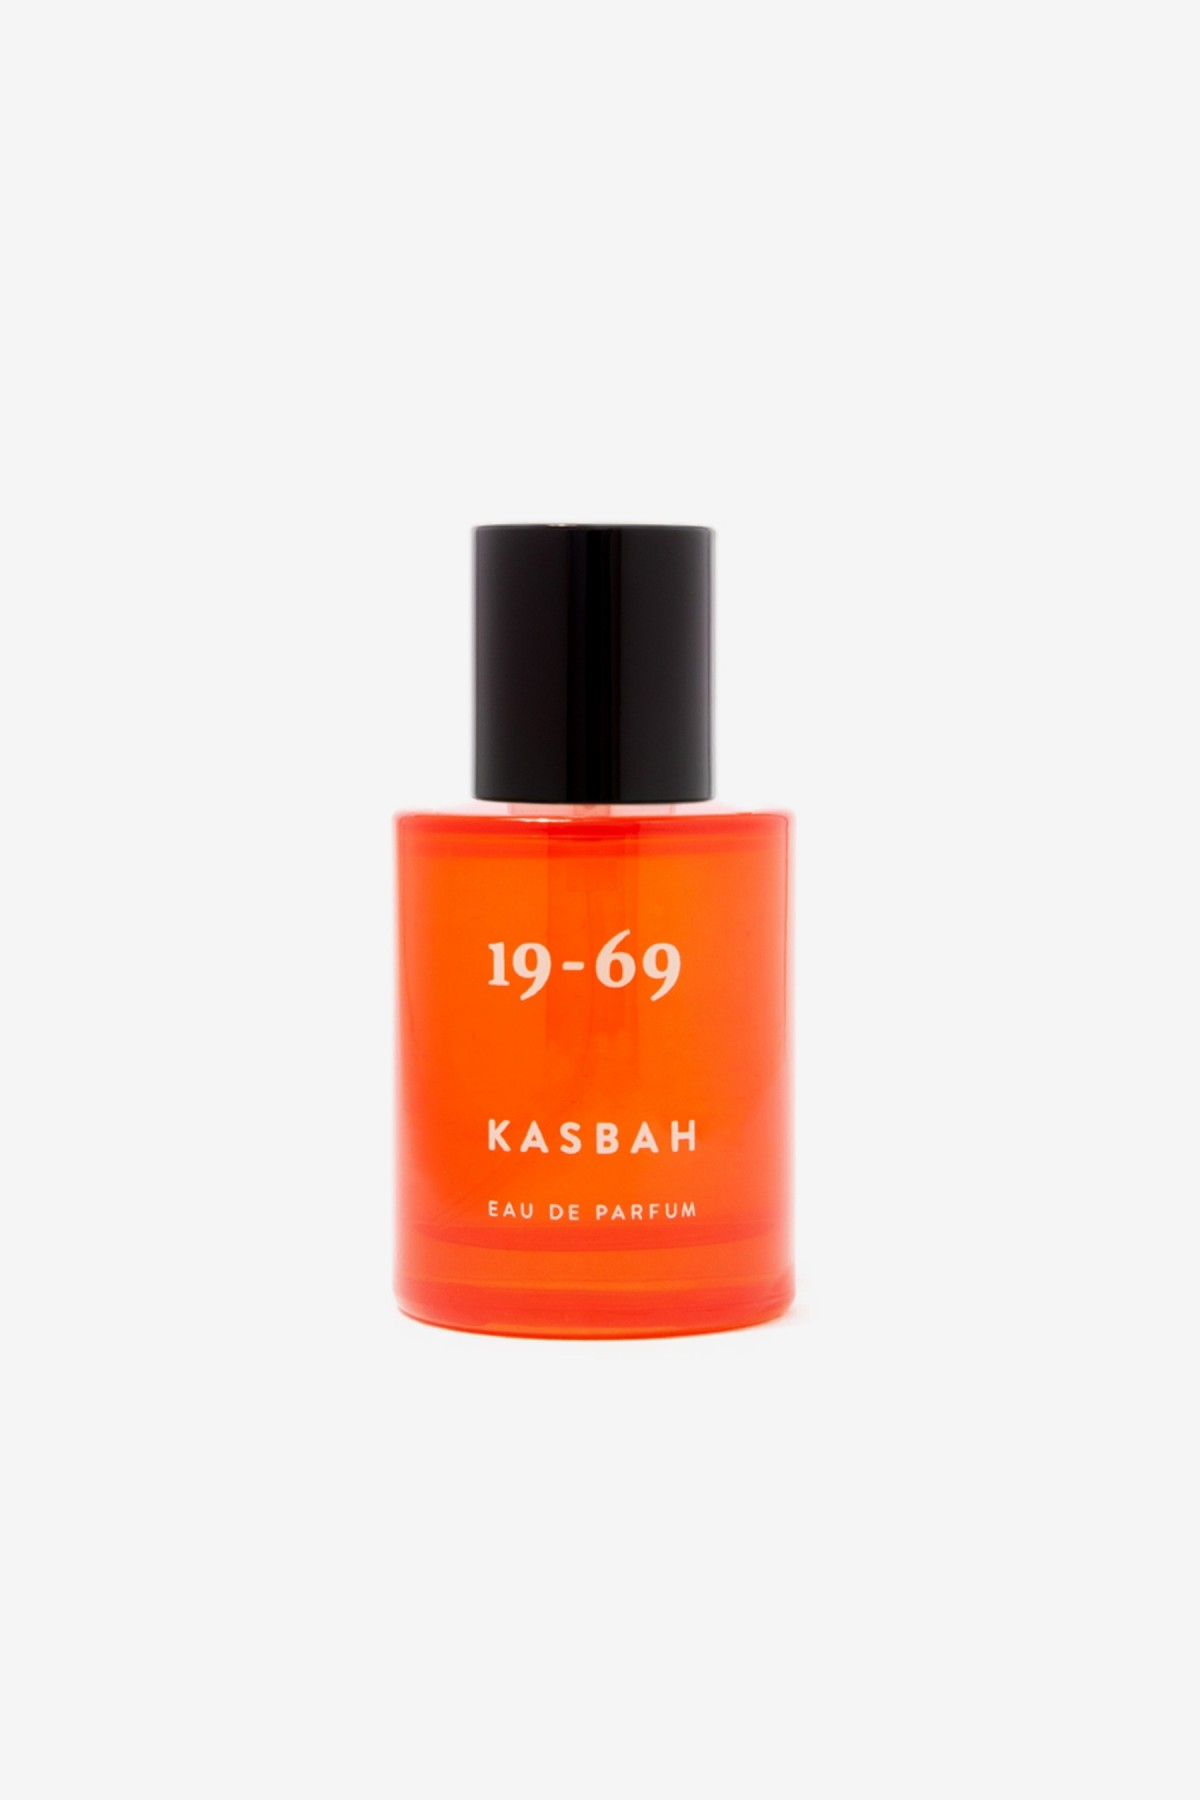 19-69 Kasbah Eau de Parfum in 30ml